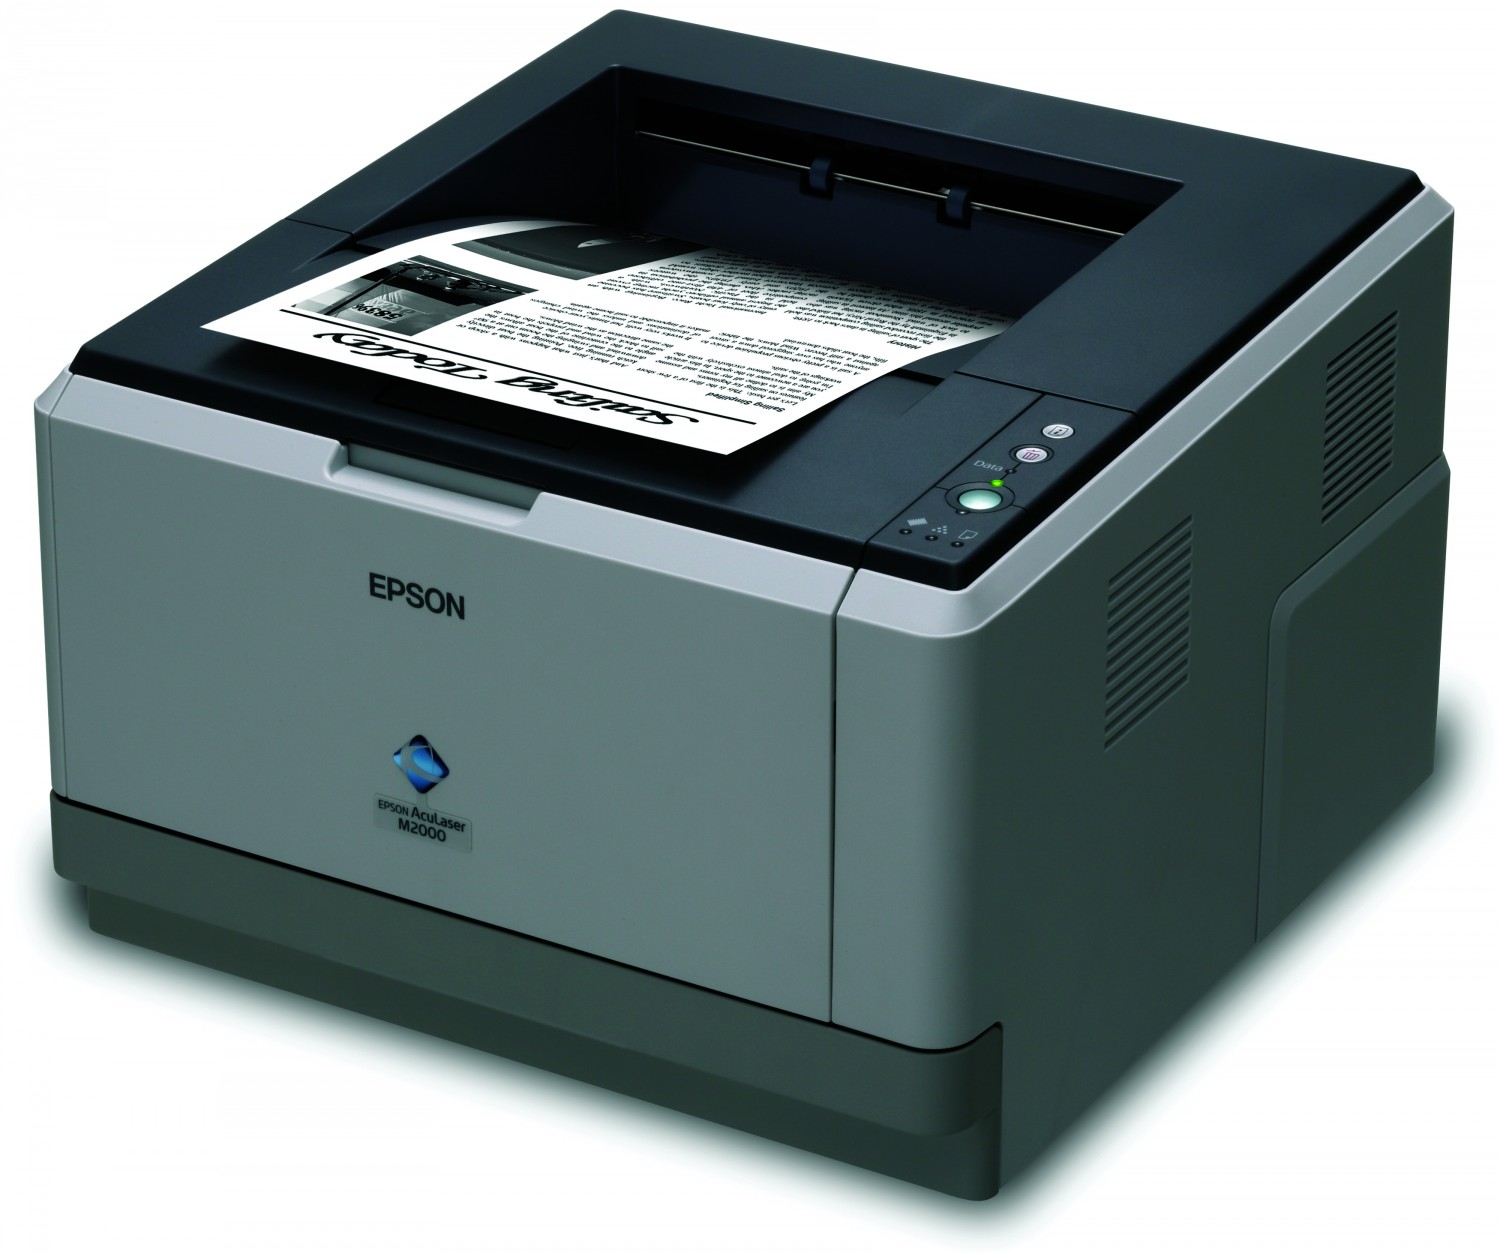  Epson  M200  Wifi Printer Driver  Wink Printer Solutions 